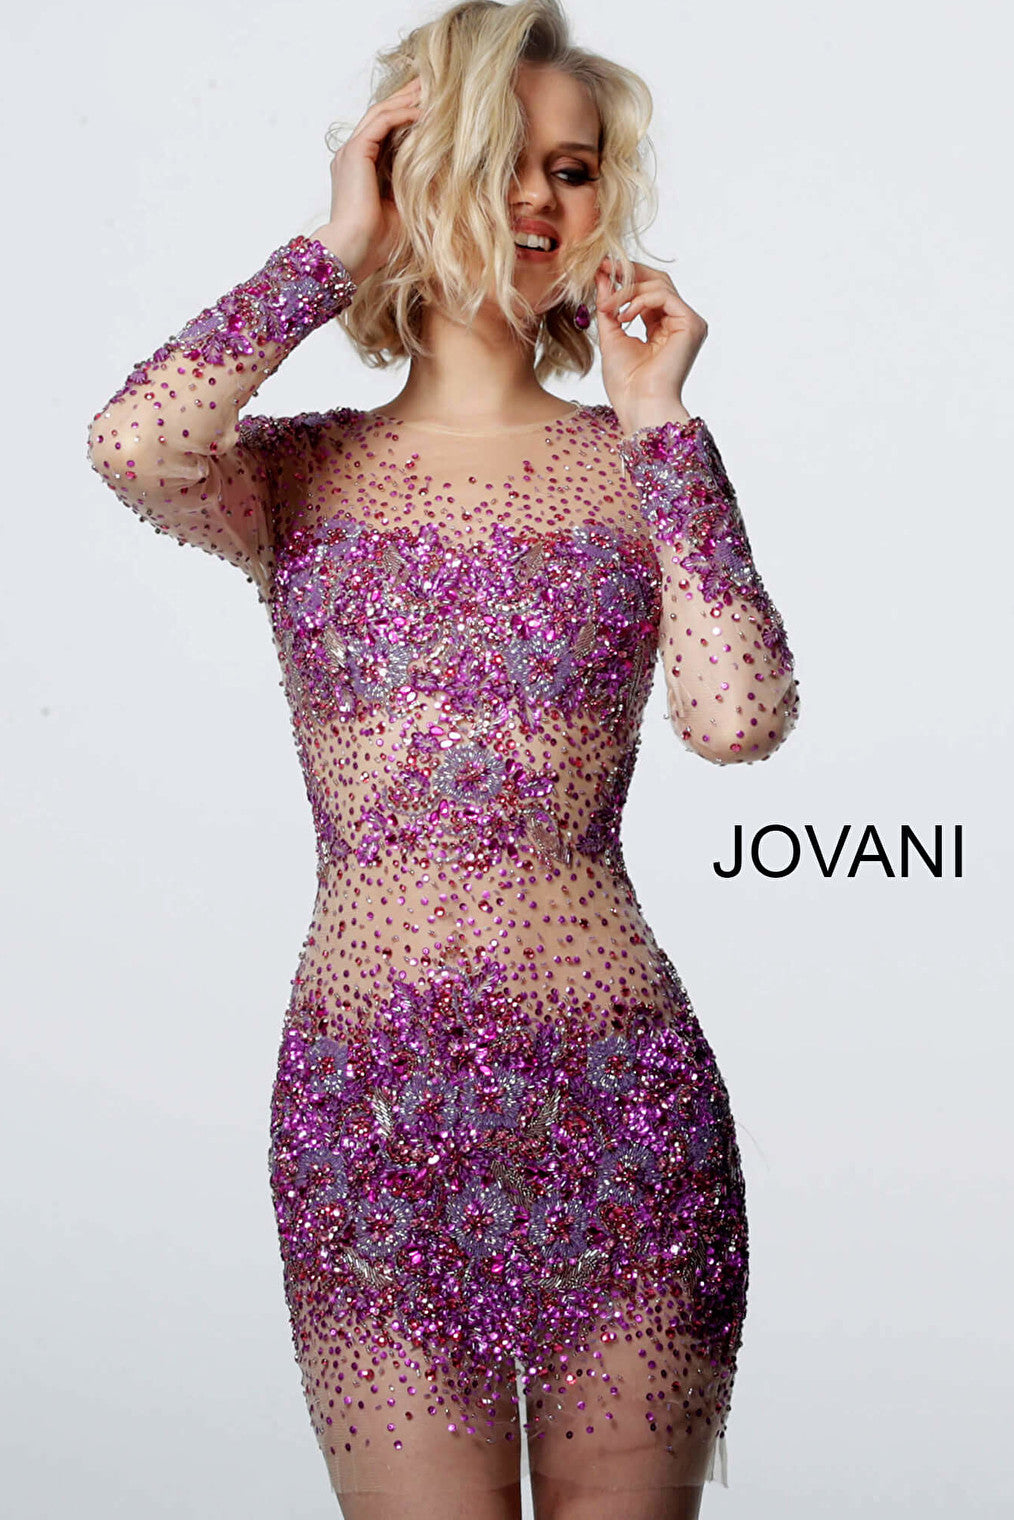 Jovani beaded fuchsia sheer cocktail dress 47598